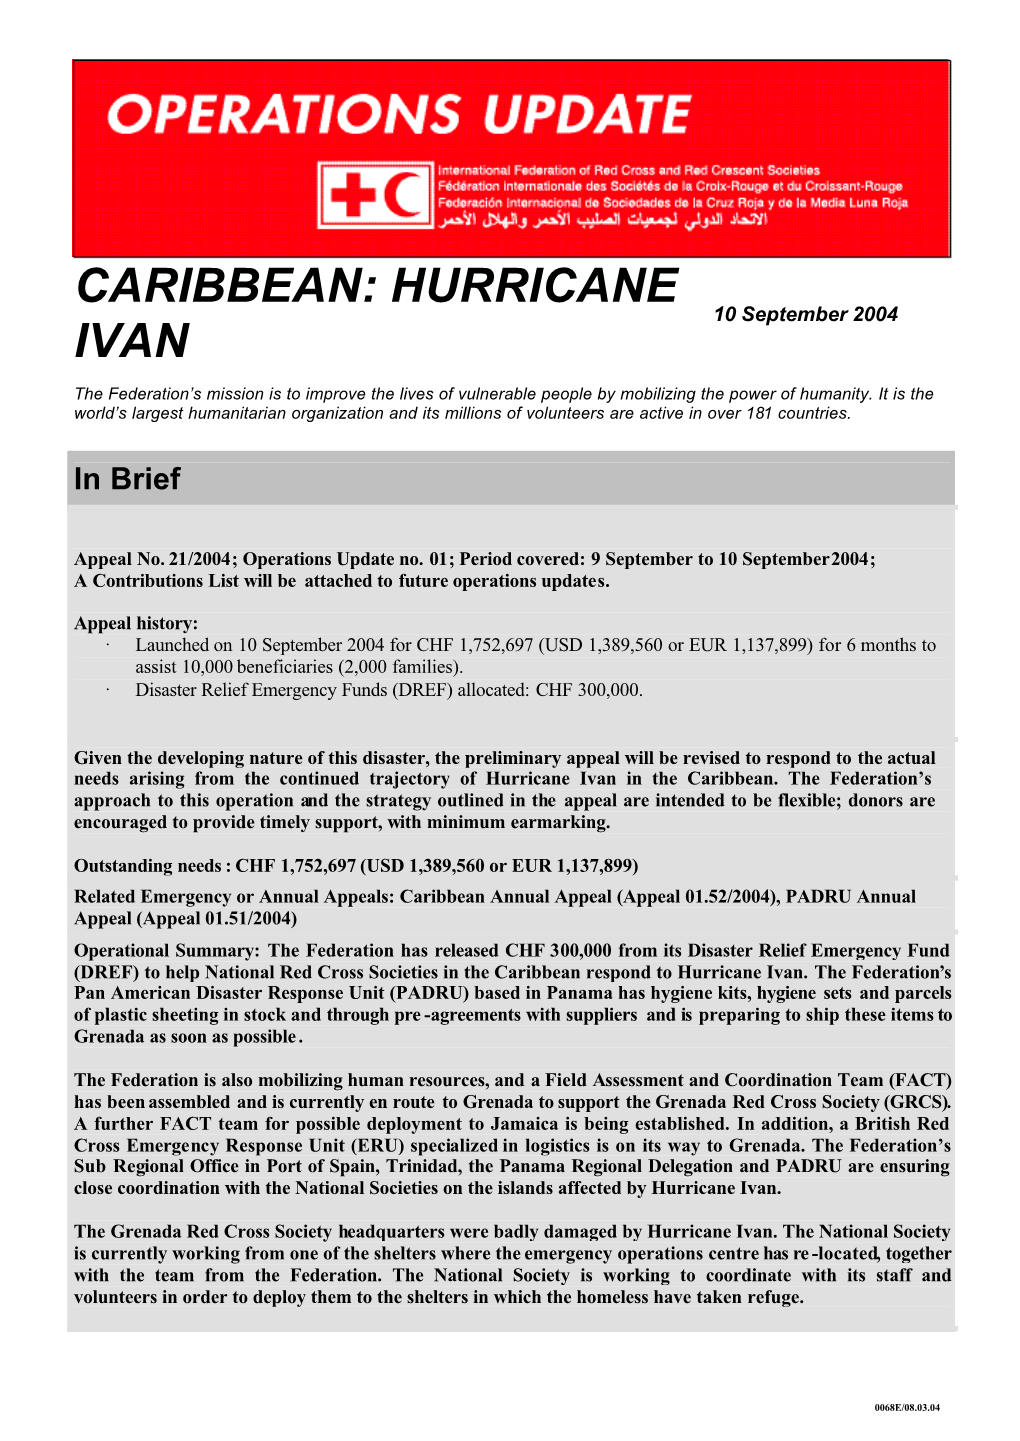 Caribbean: Hurricane Ivan (Appeal 21/2004)